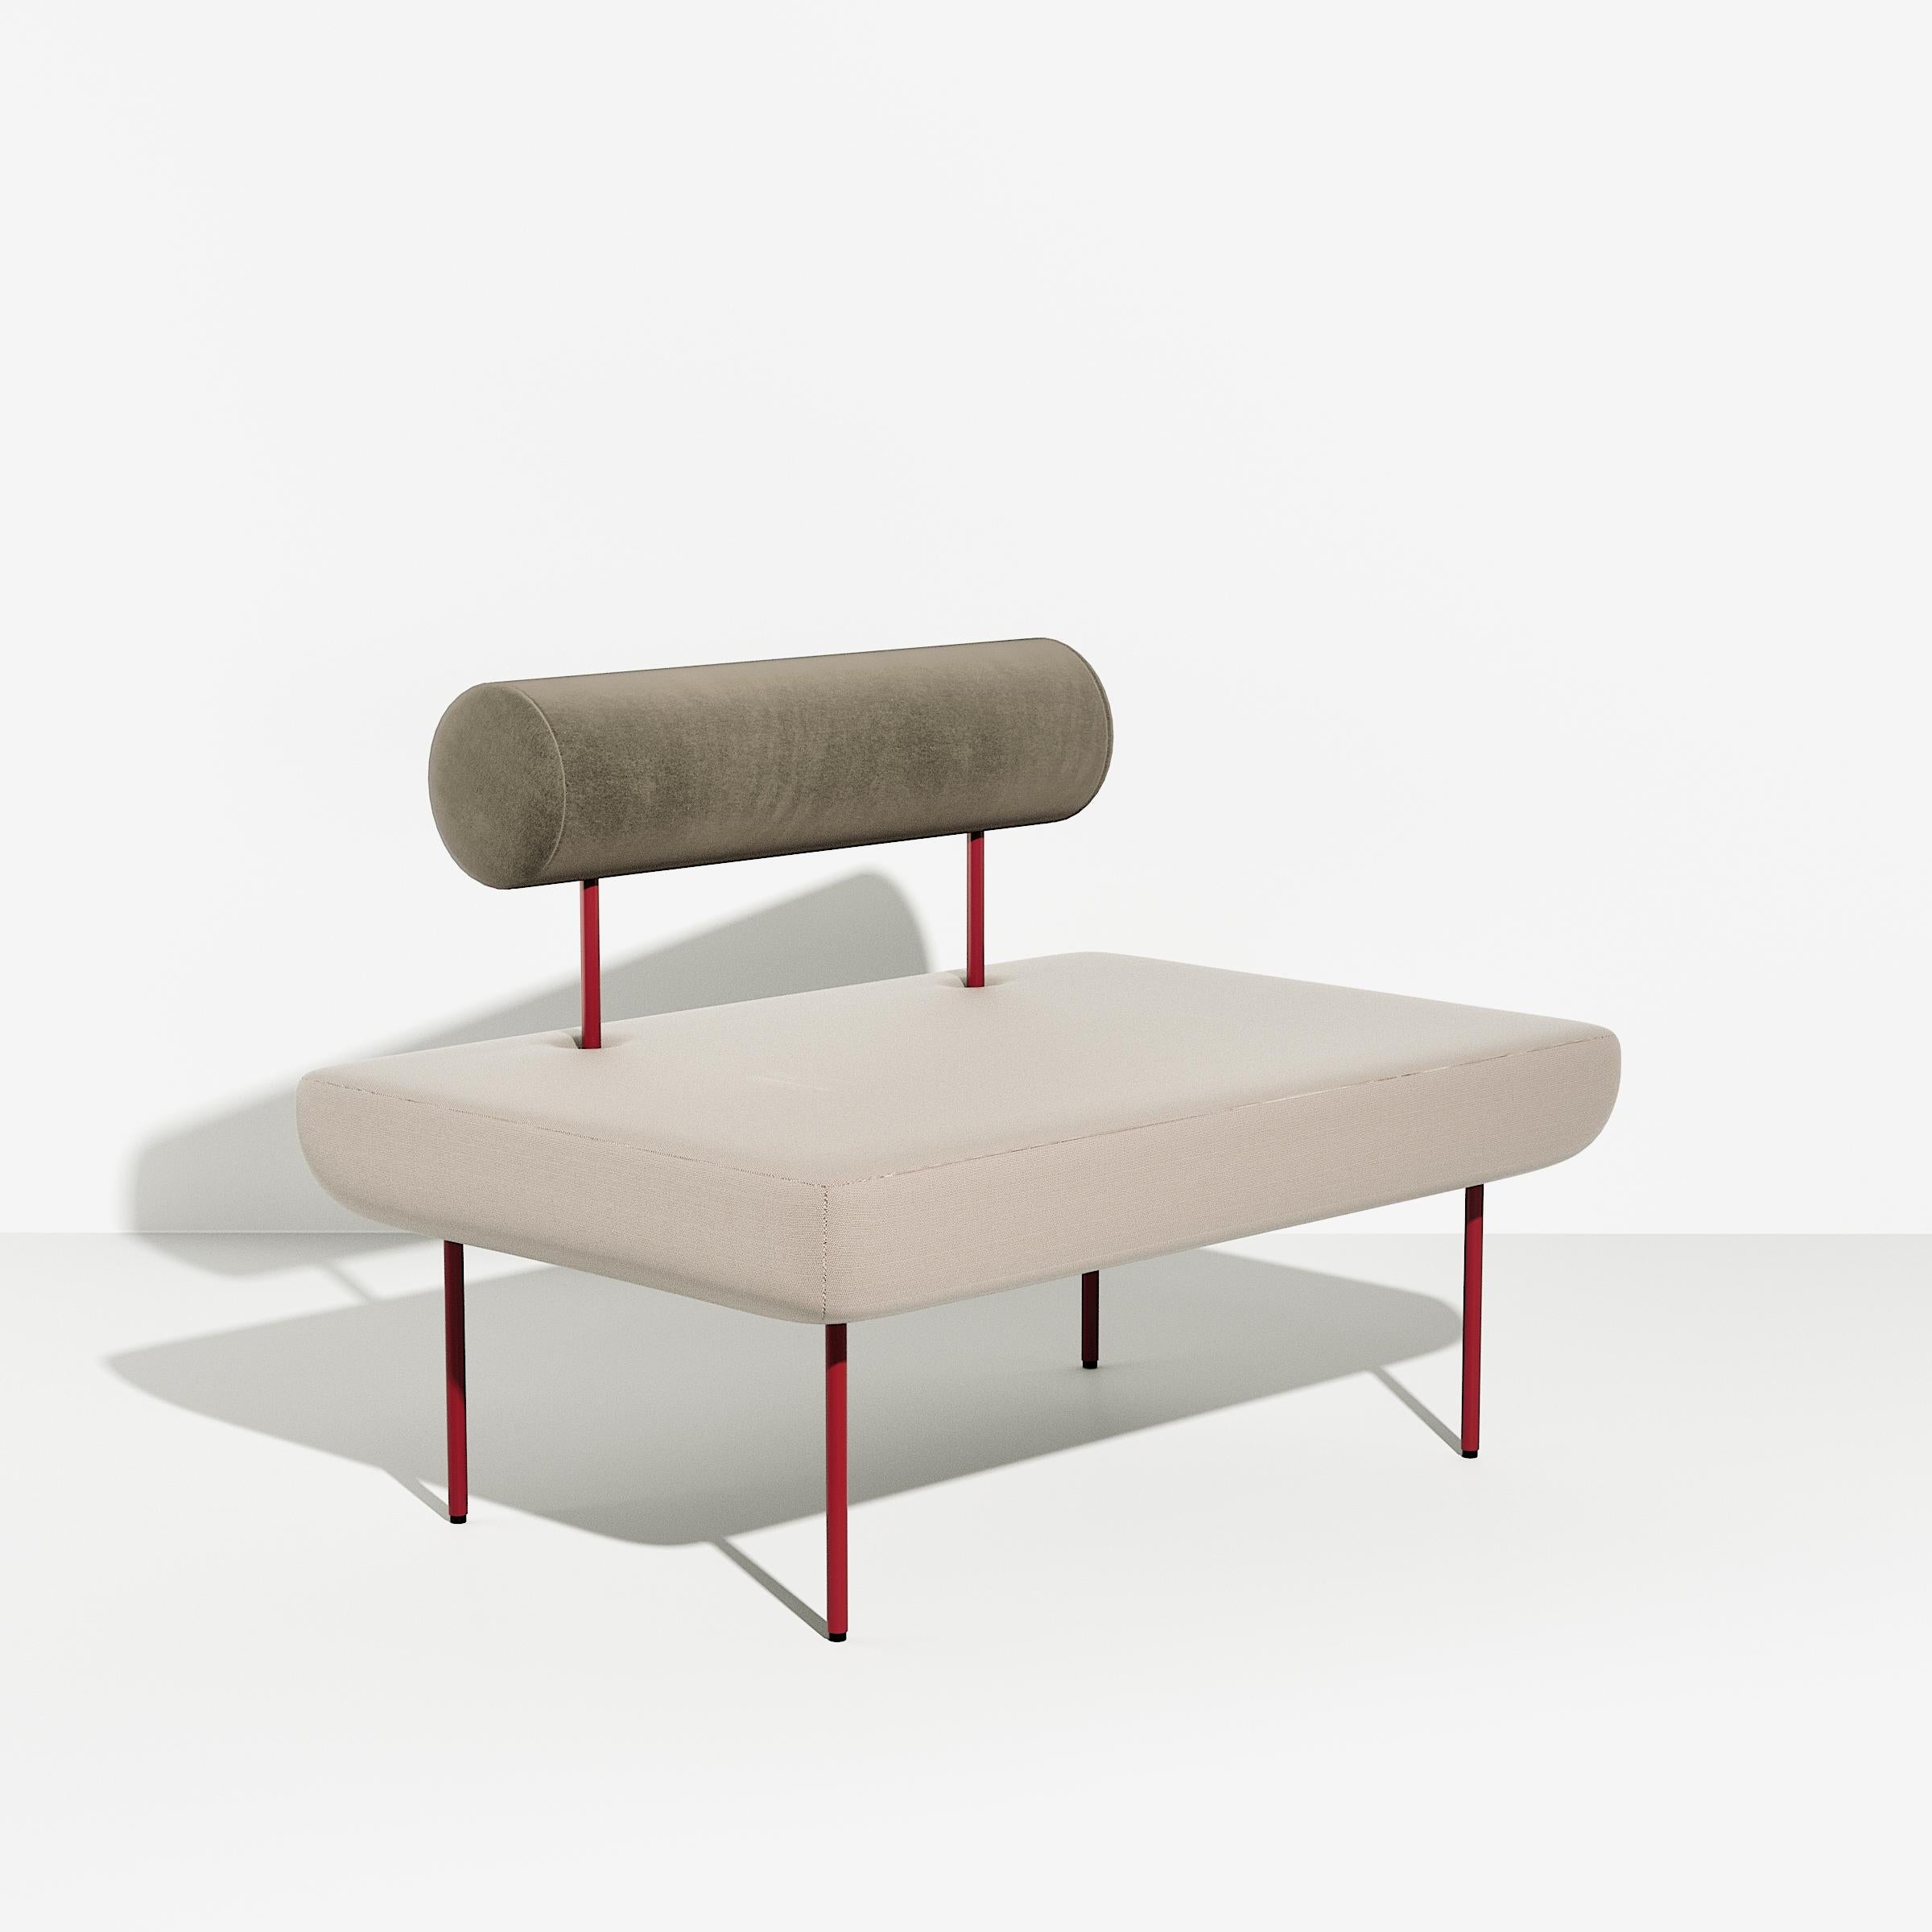 European Petite Friture Large Hoff Armchair in Grey-Beige by Morten & Jonas, 2015 For Sale